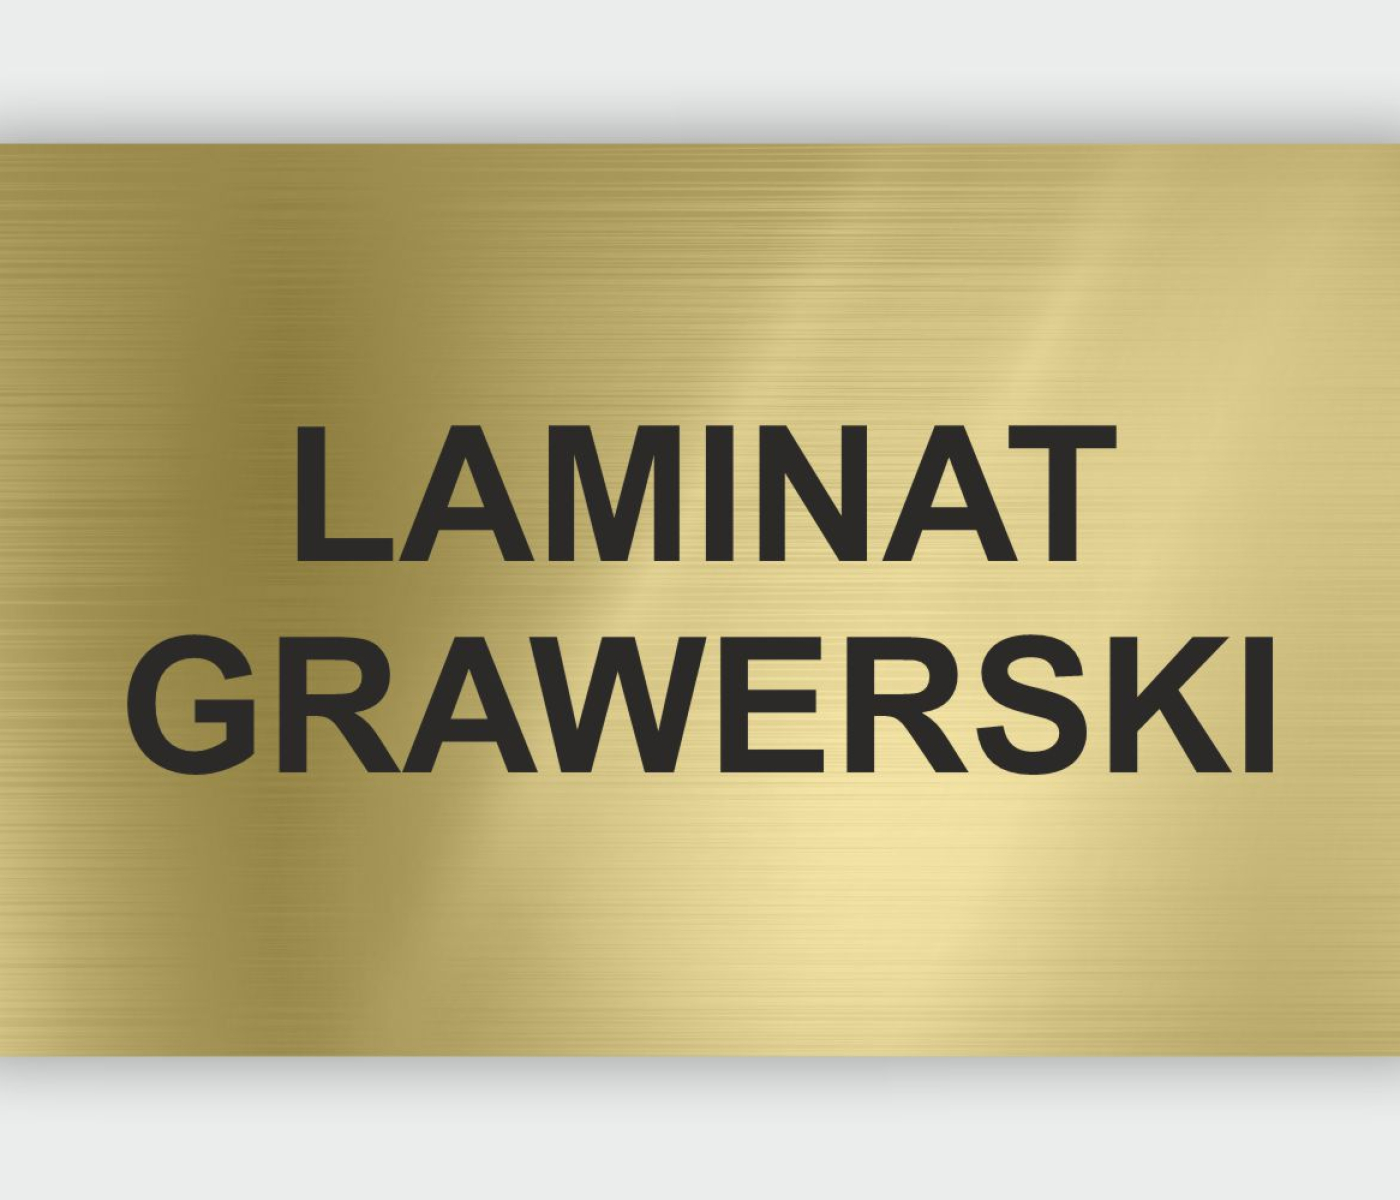 Laminat Grawerski Producent